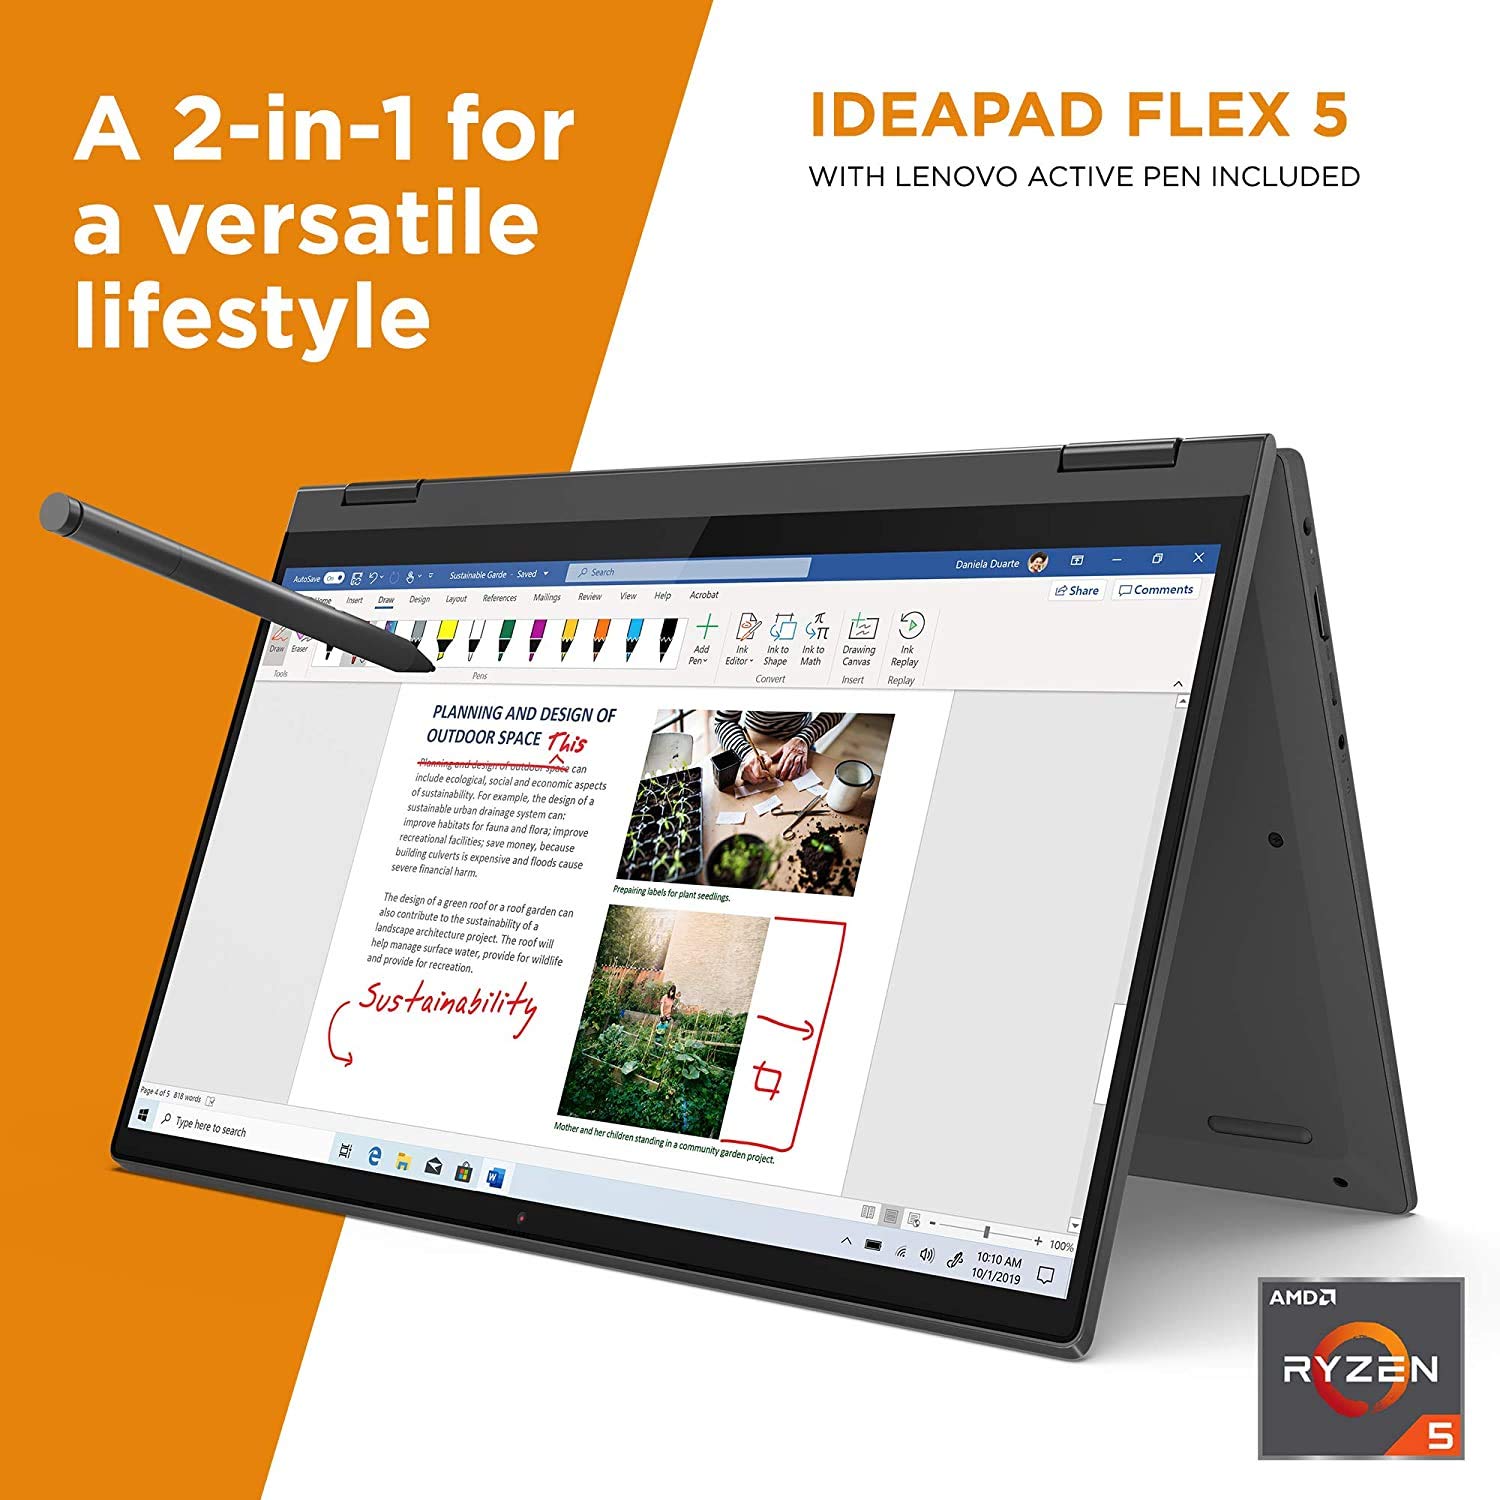 Lenovo IdeaPad Flex 5 14" Touchscreen 2-in-1 Laptop 2022, AMD Ryzen 5 5500U 6-Core, 16GB DDR4 256GB NVMe SSD, Radeon Graphics, HDMI, Fingerprint, WiFi-6, Windows 11 Pro, Stylus Pen and COU 32GB USB